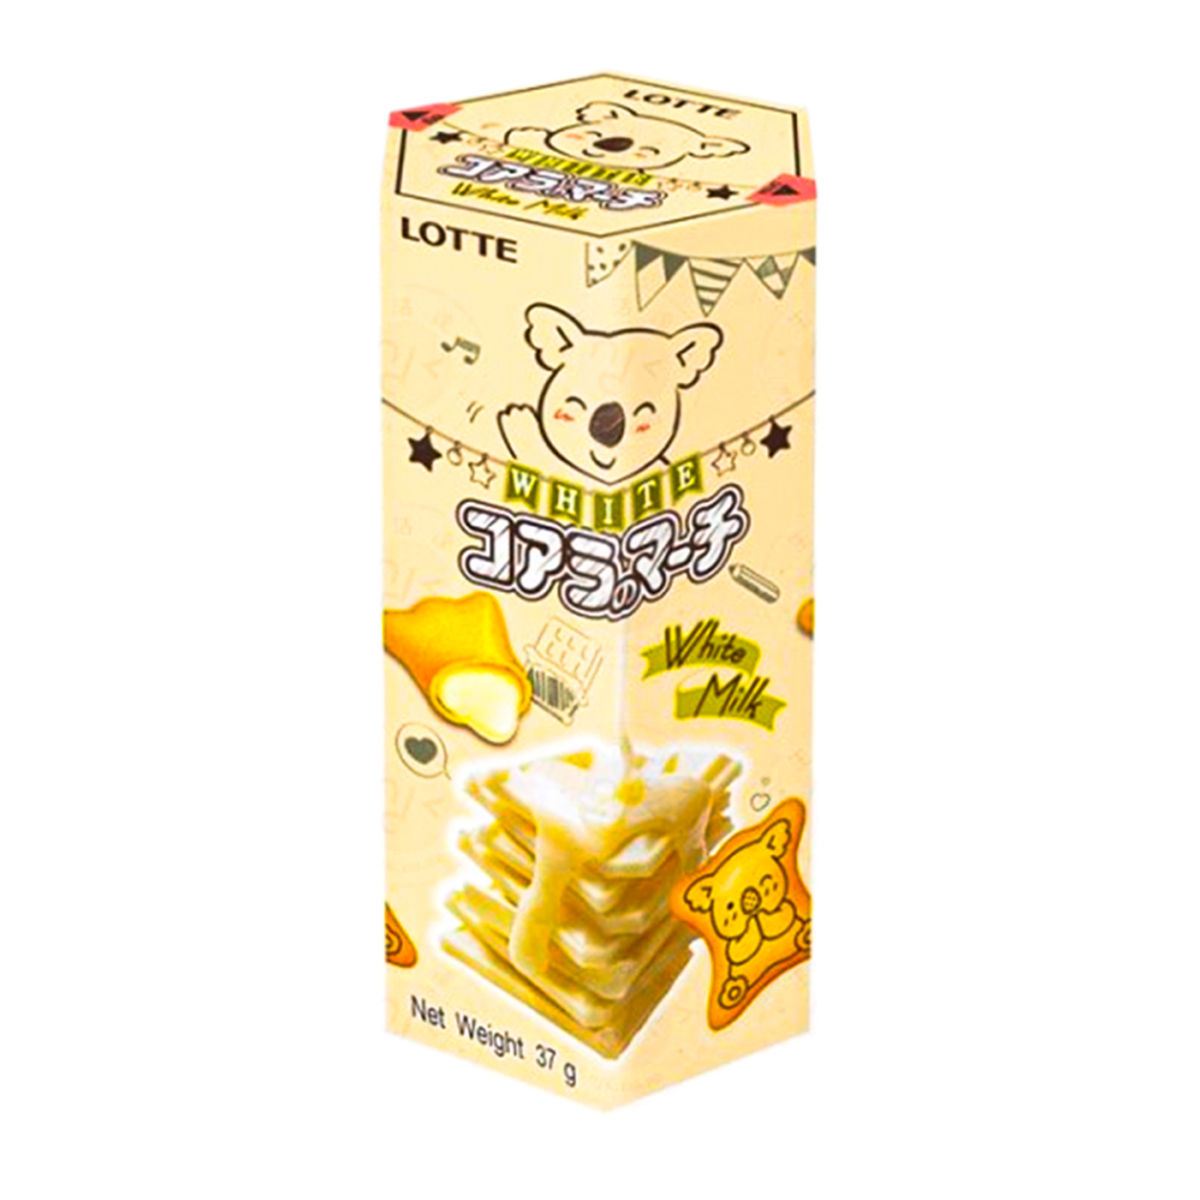 Biscoito Koala com Recheio Chocolate Branco Lotte - 33 gramas